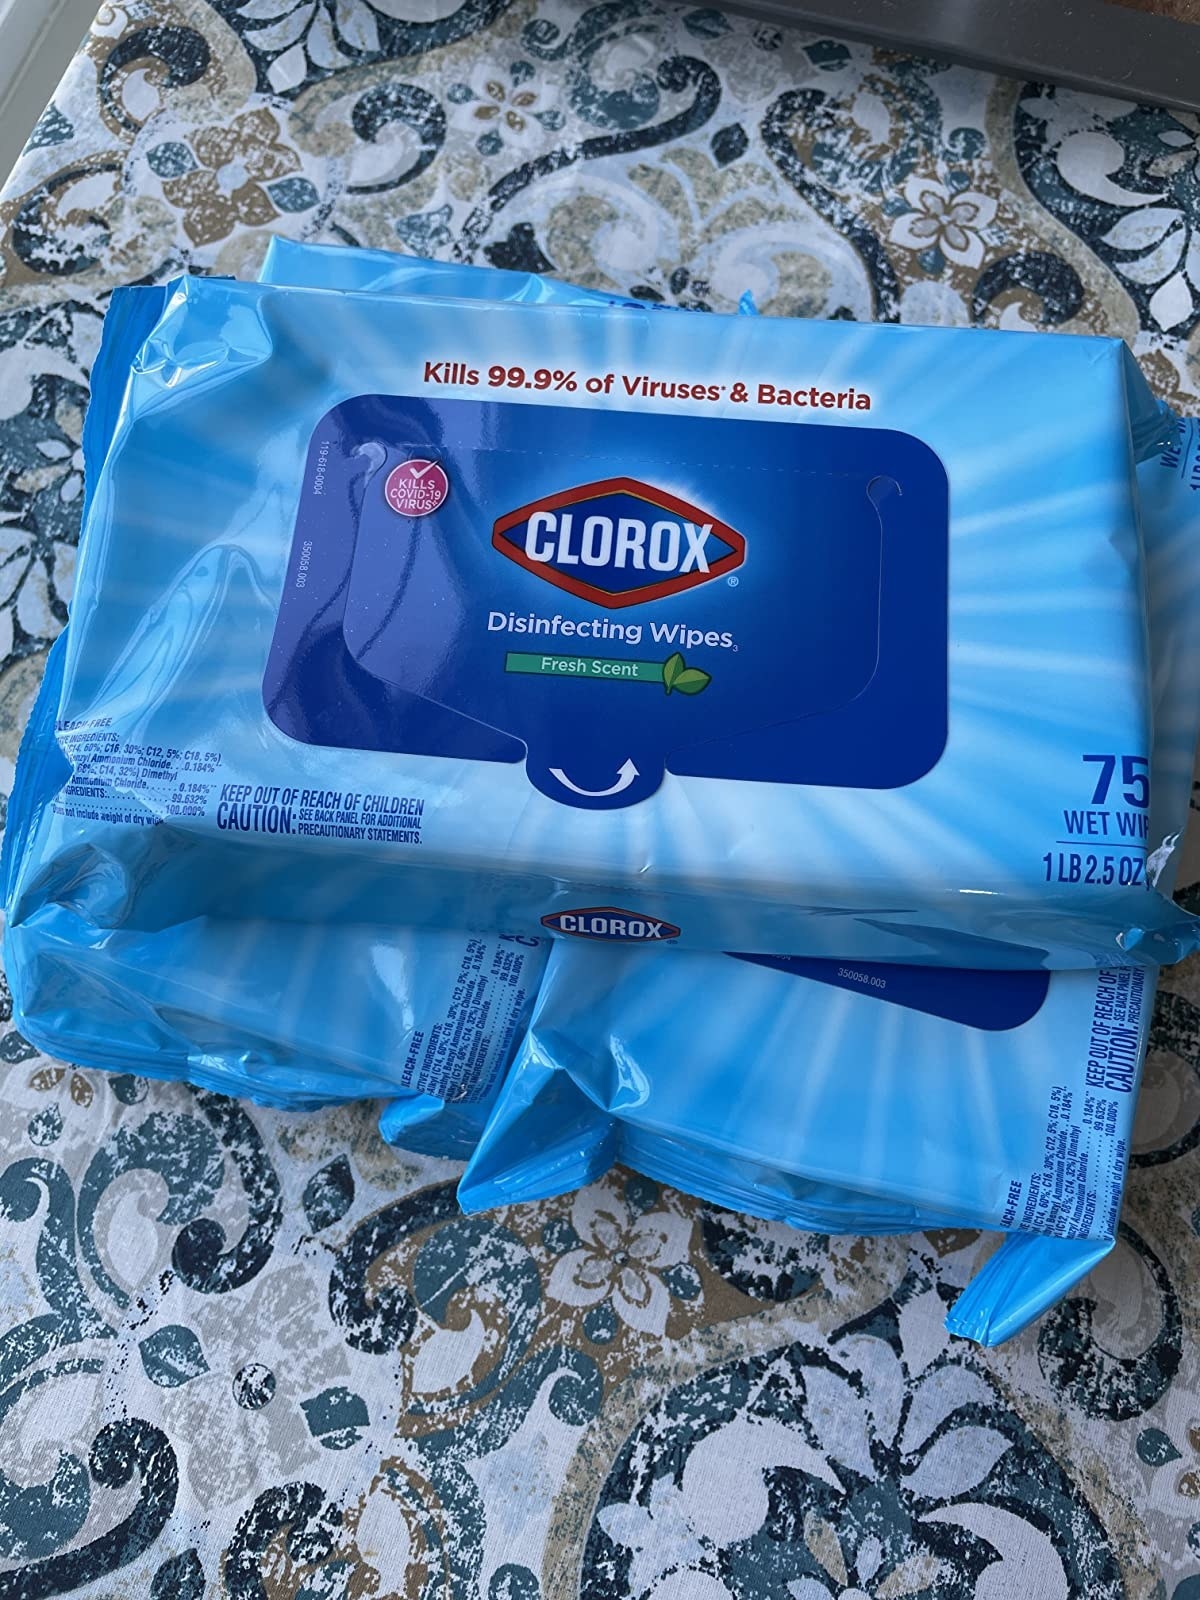 Three packs of Clorox disinfecting wipes